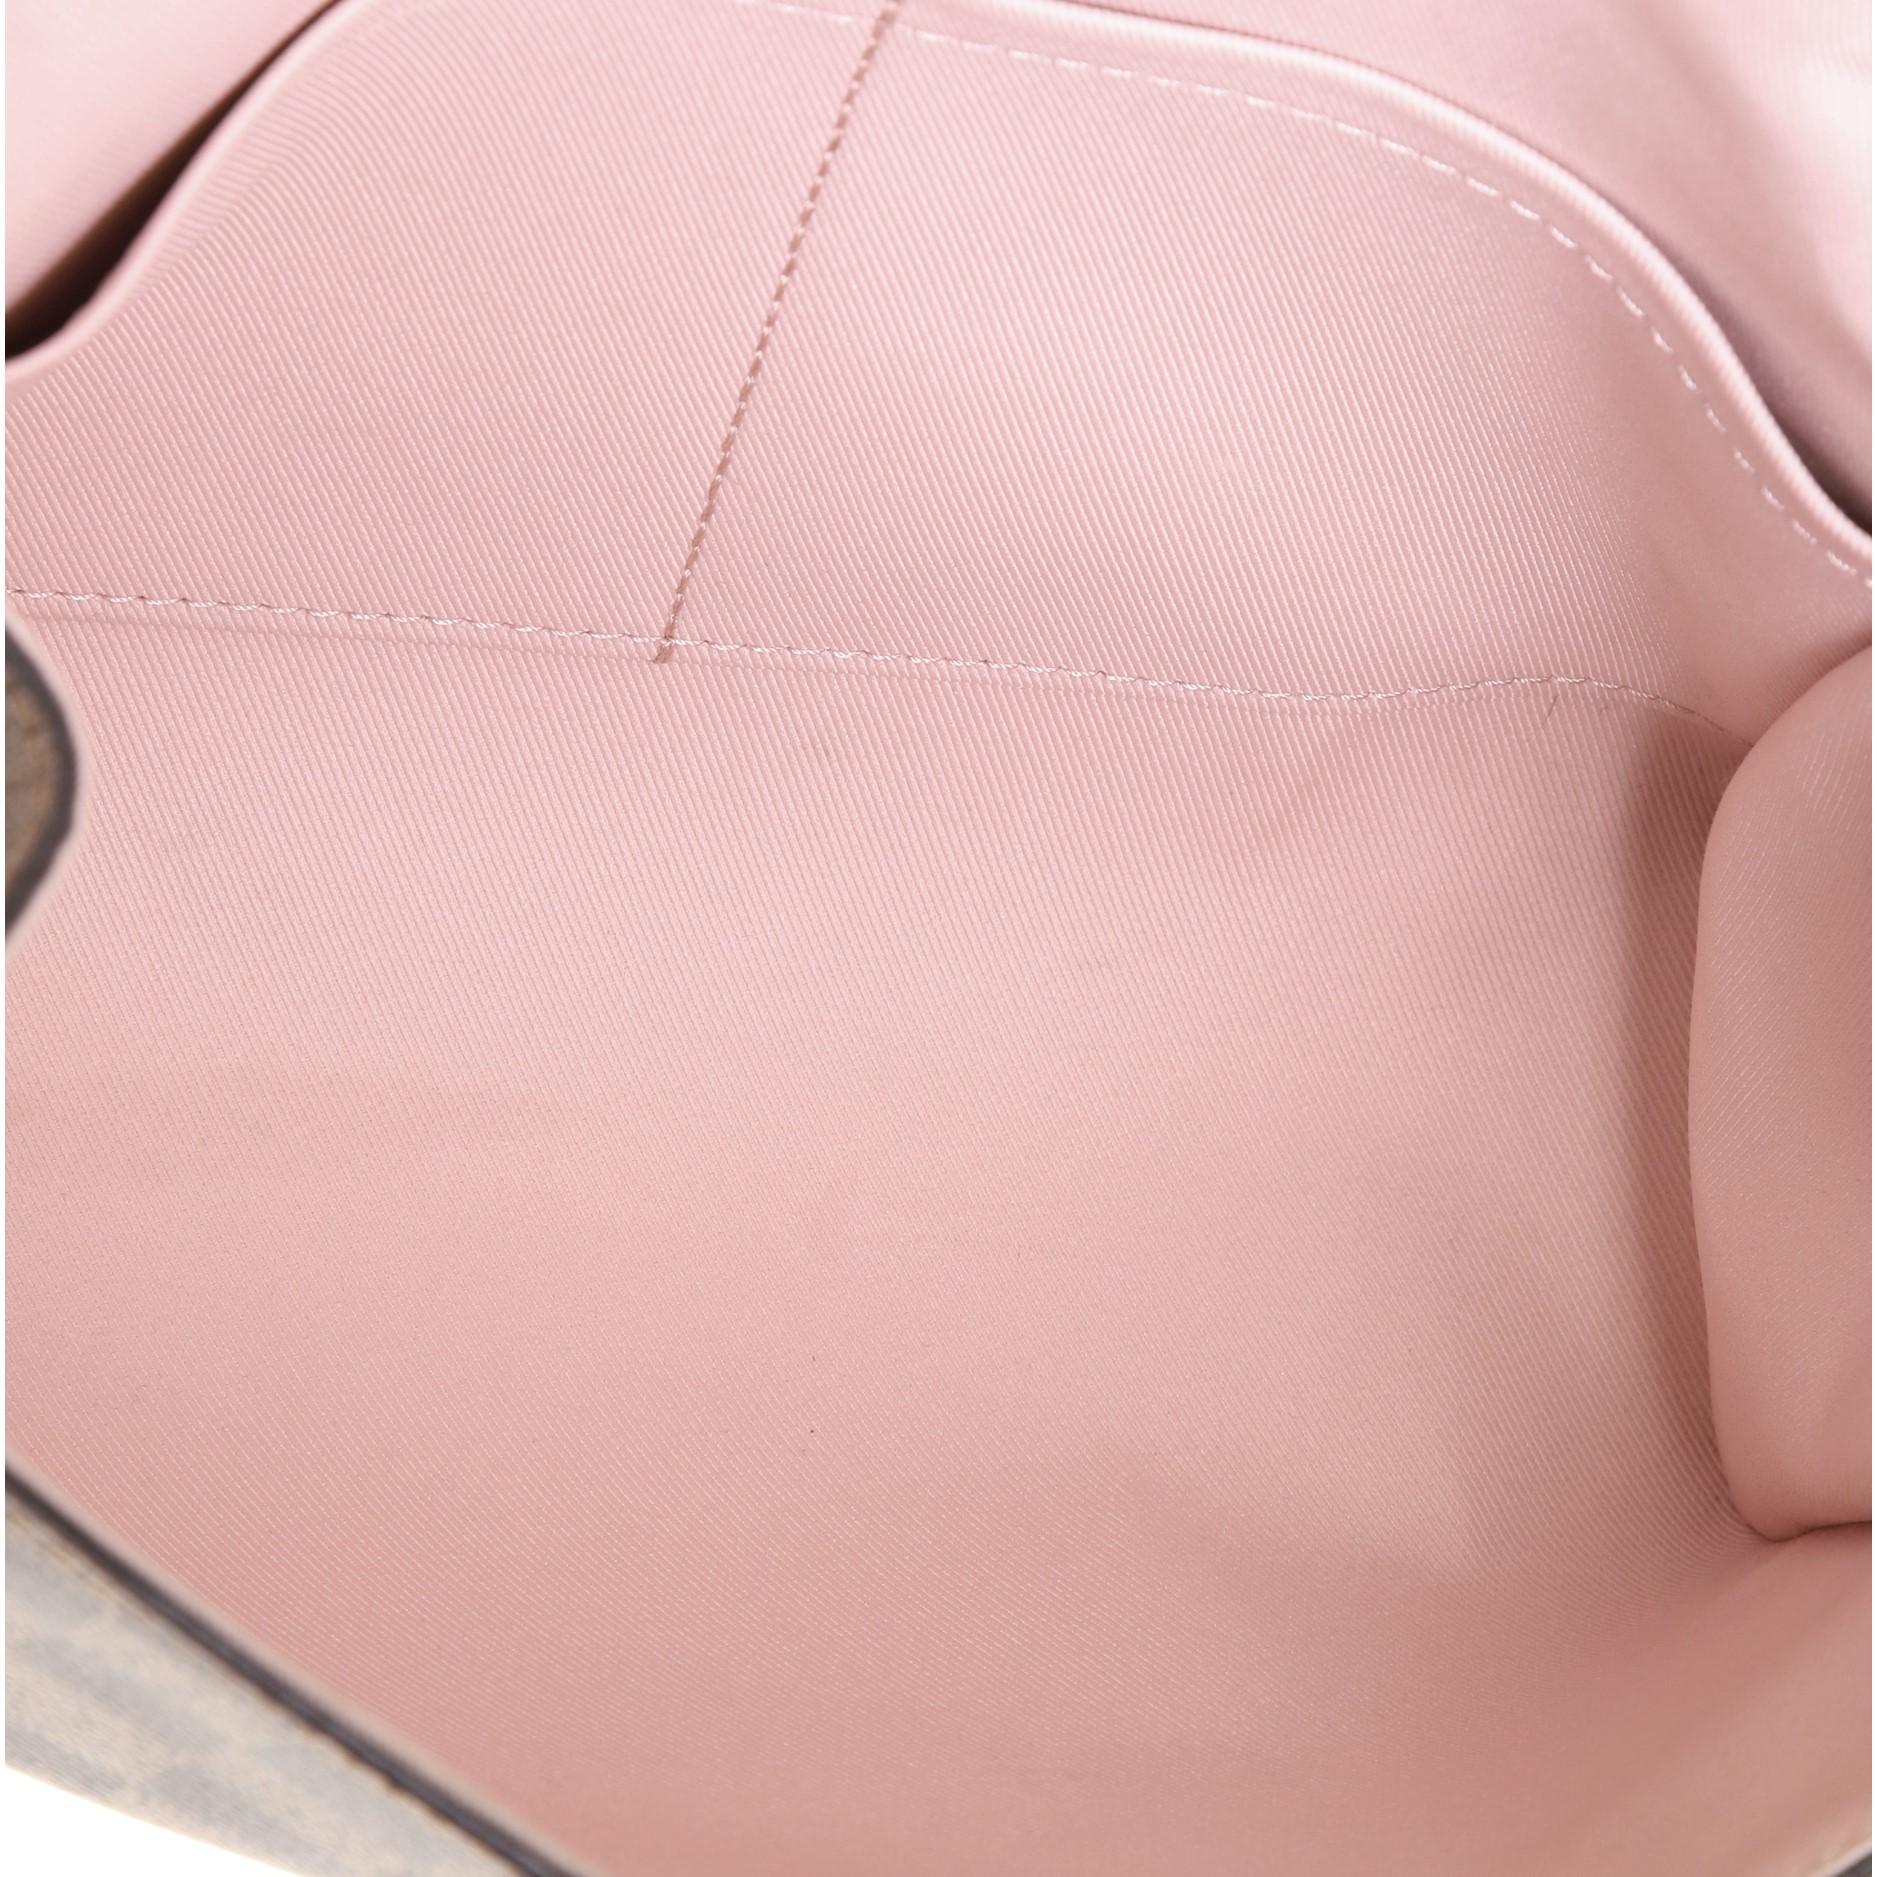 Women's or Men's Louis Vuitton Bond Street Handbag Damier with Leather BB